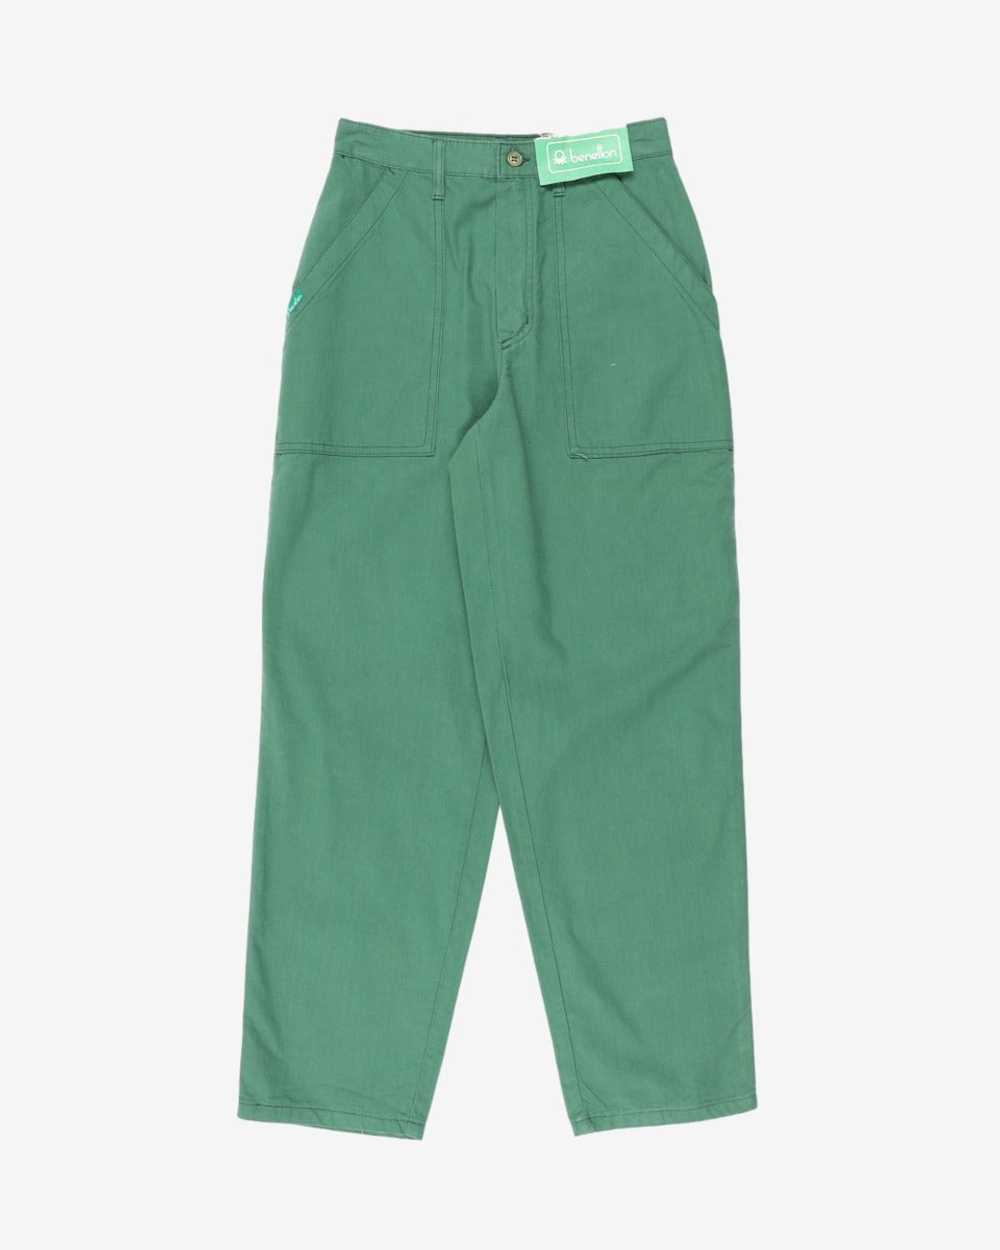 Benetton Deadstock 1980s cargo style trousers - image 4